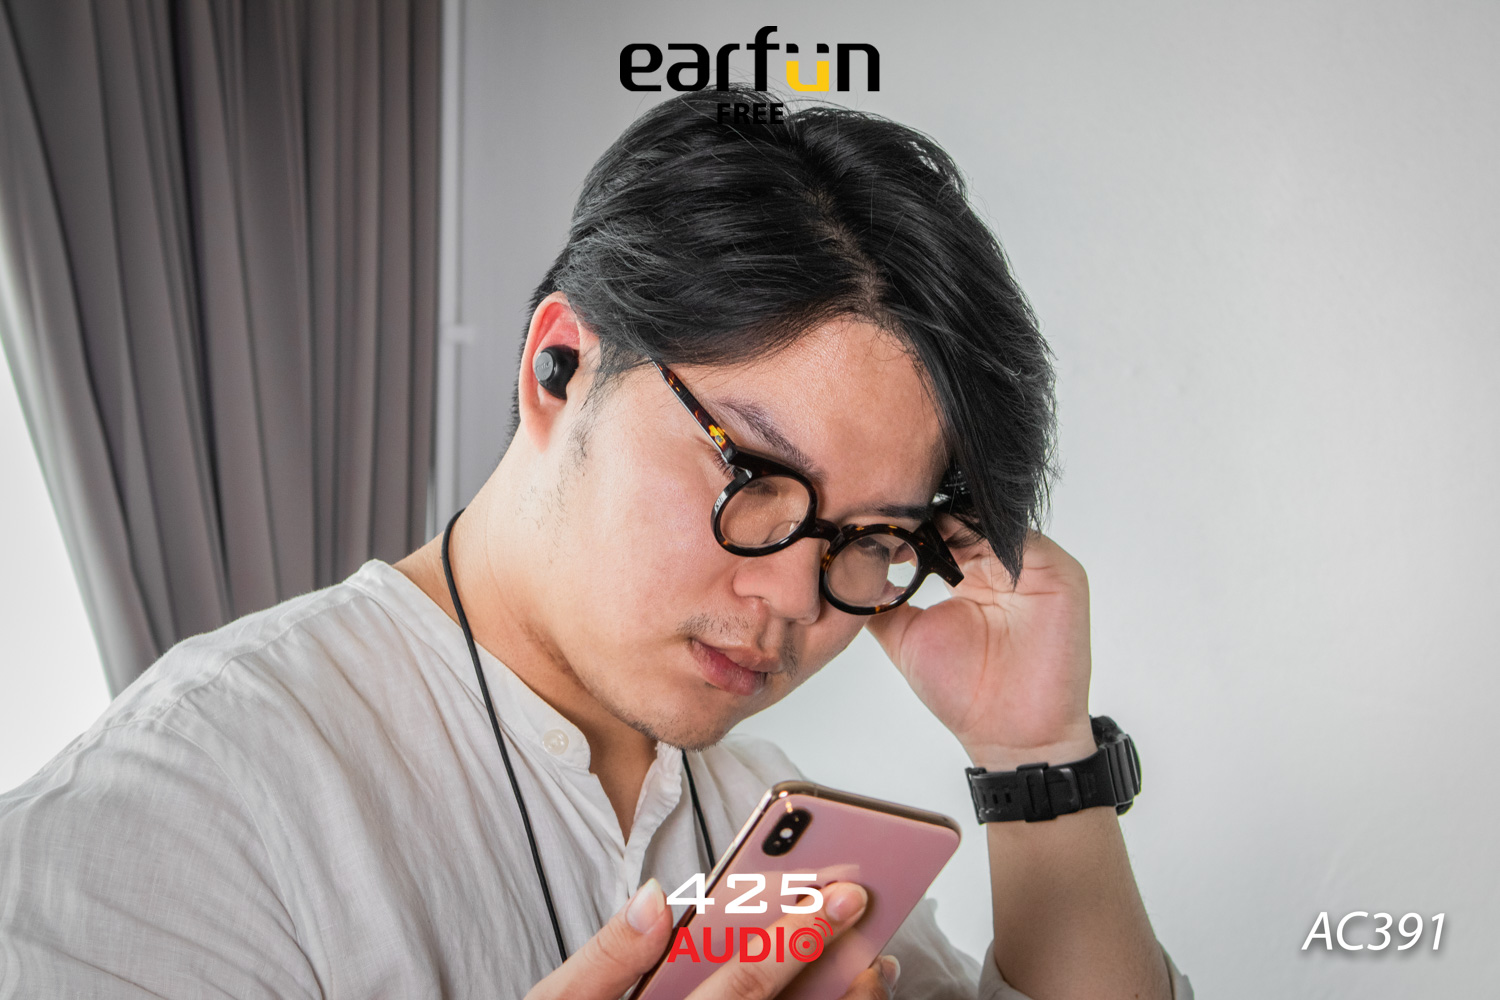 Earfun Free,earfun,true wireless,หูฟังไร้สาย,ipx7,True Wireless IPX7,extreme bass,หูฟังเบสหนัก